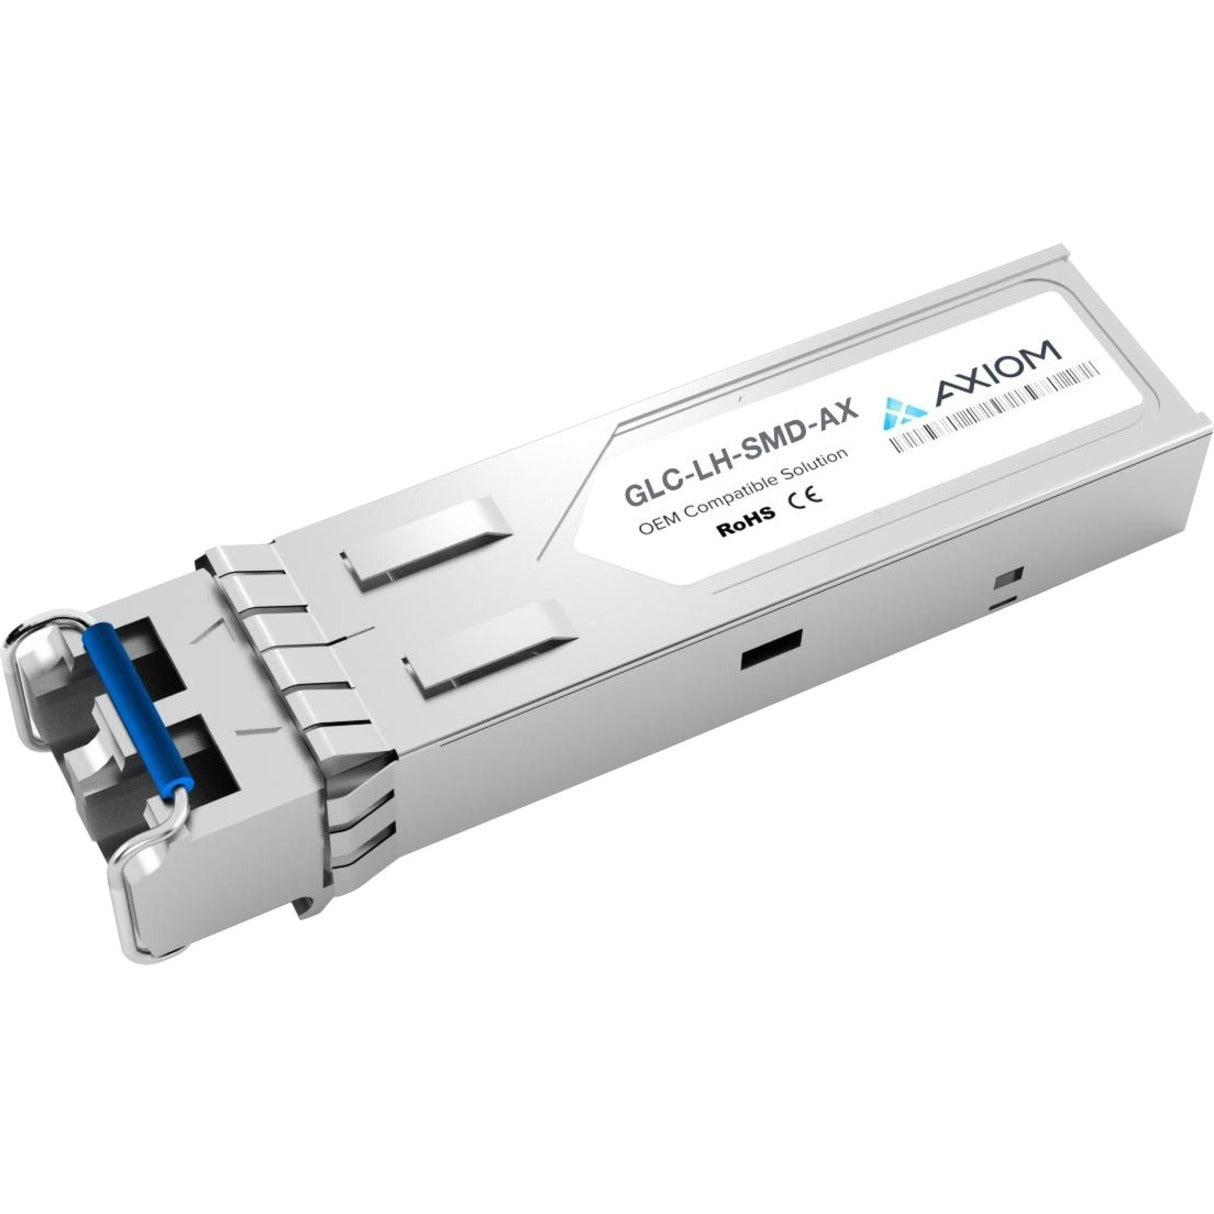 Axiom GLC-LH-SMD-AX 1000BASE-LX SFP Transceiver for Cisco - High-Speed Gigabit Ethernet Connectivity